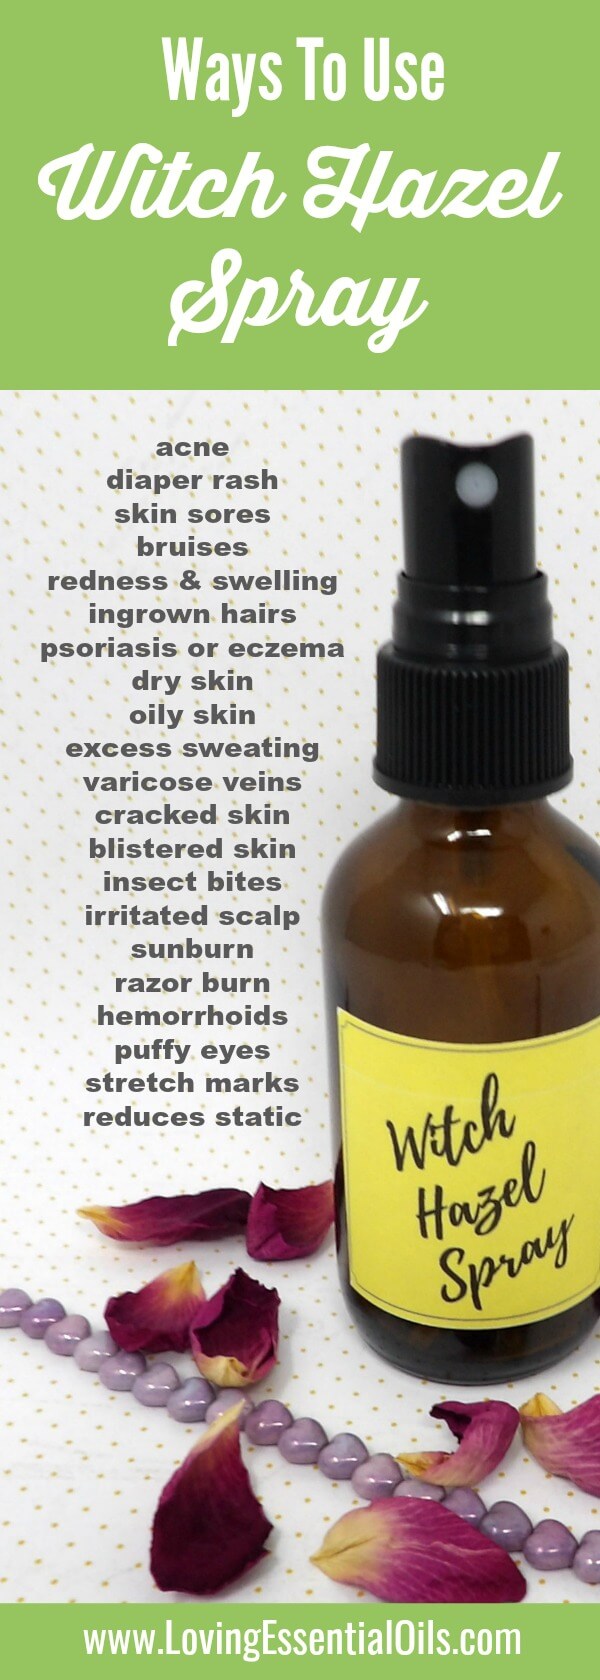 How to Use Witch Hazel Spray by Loving Essential Oils